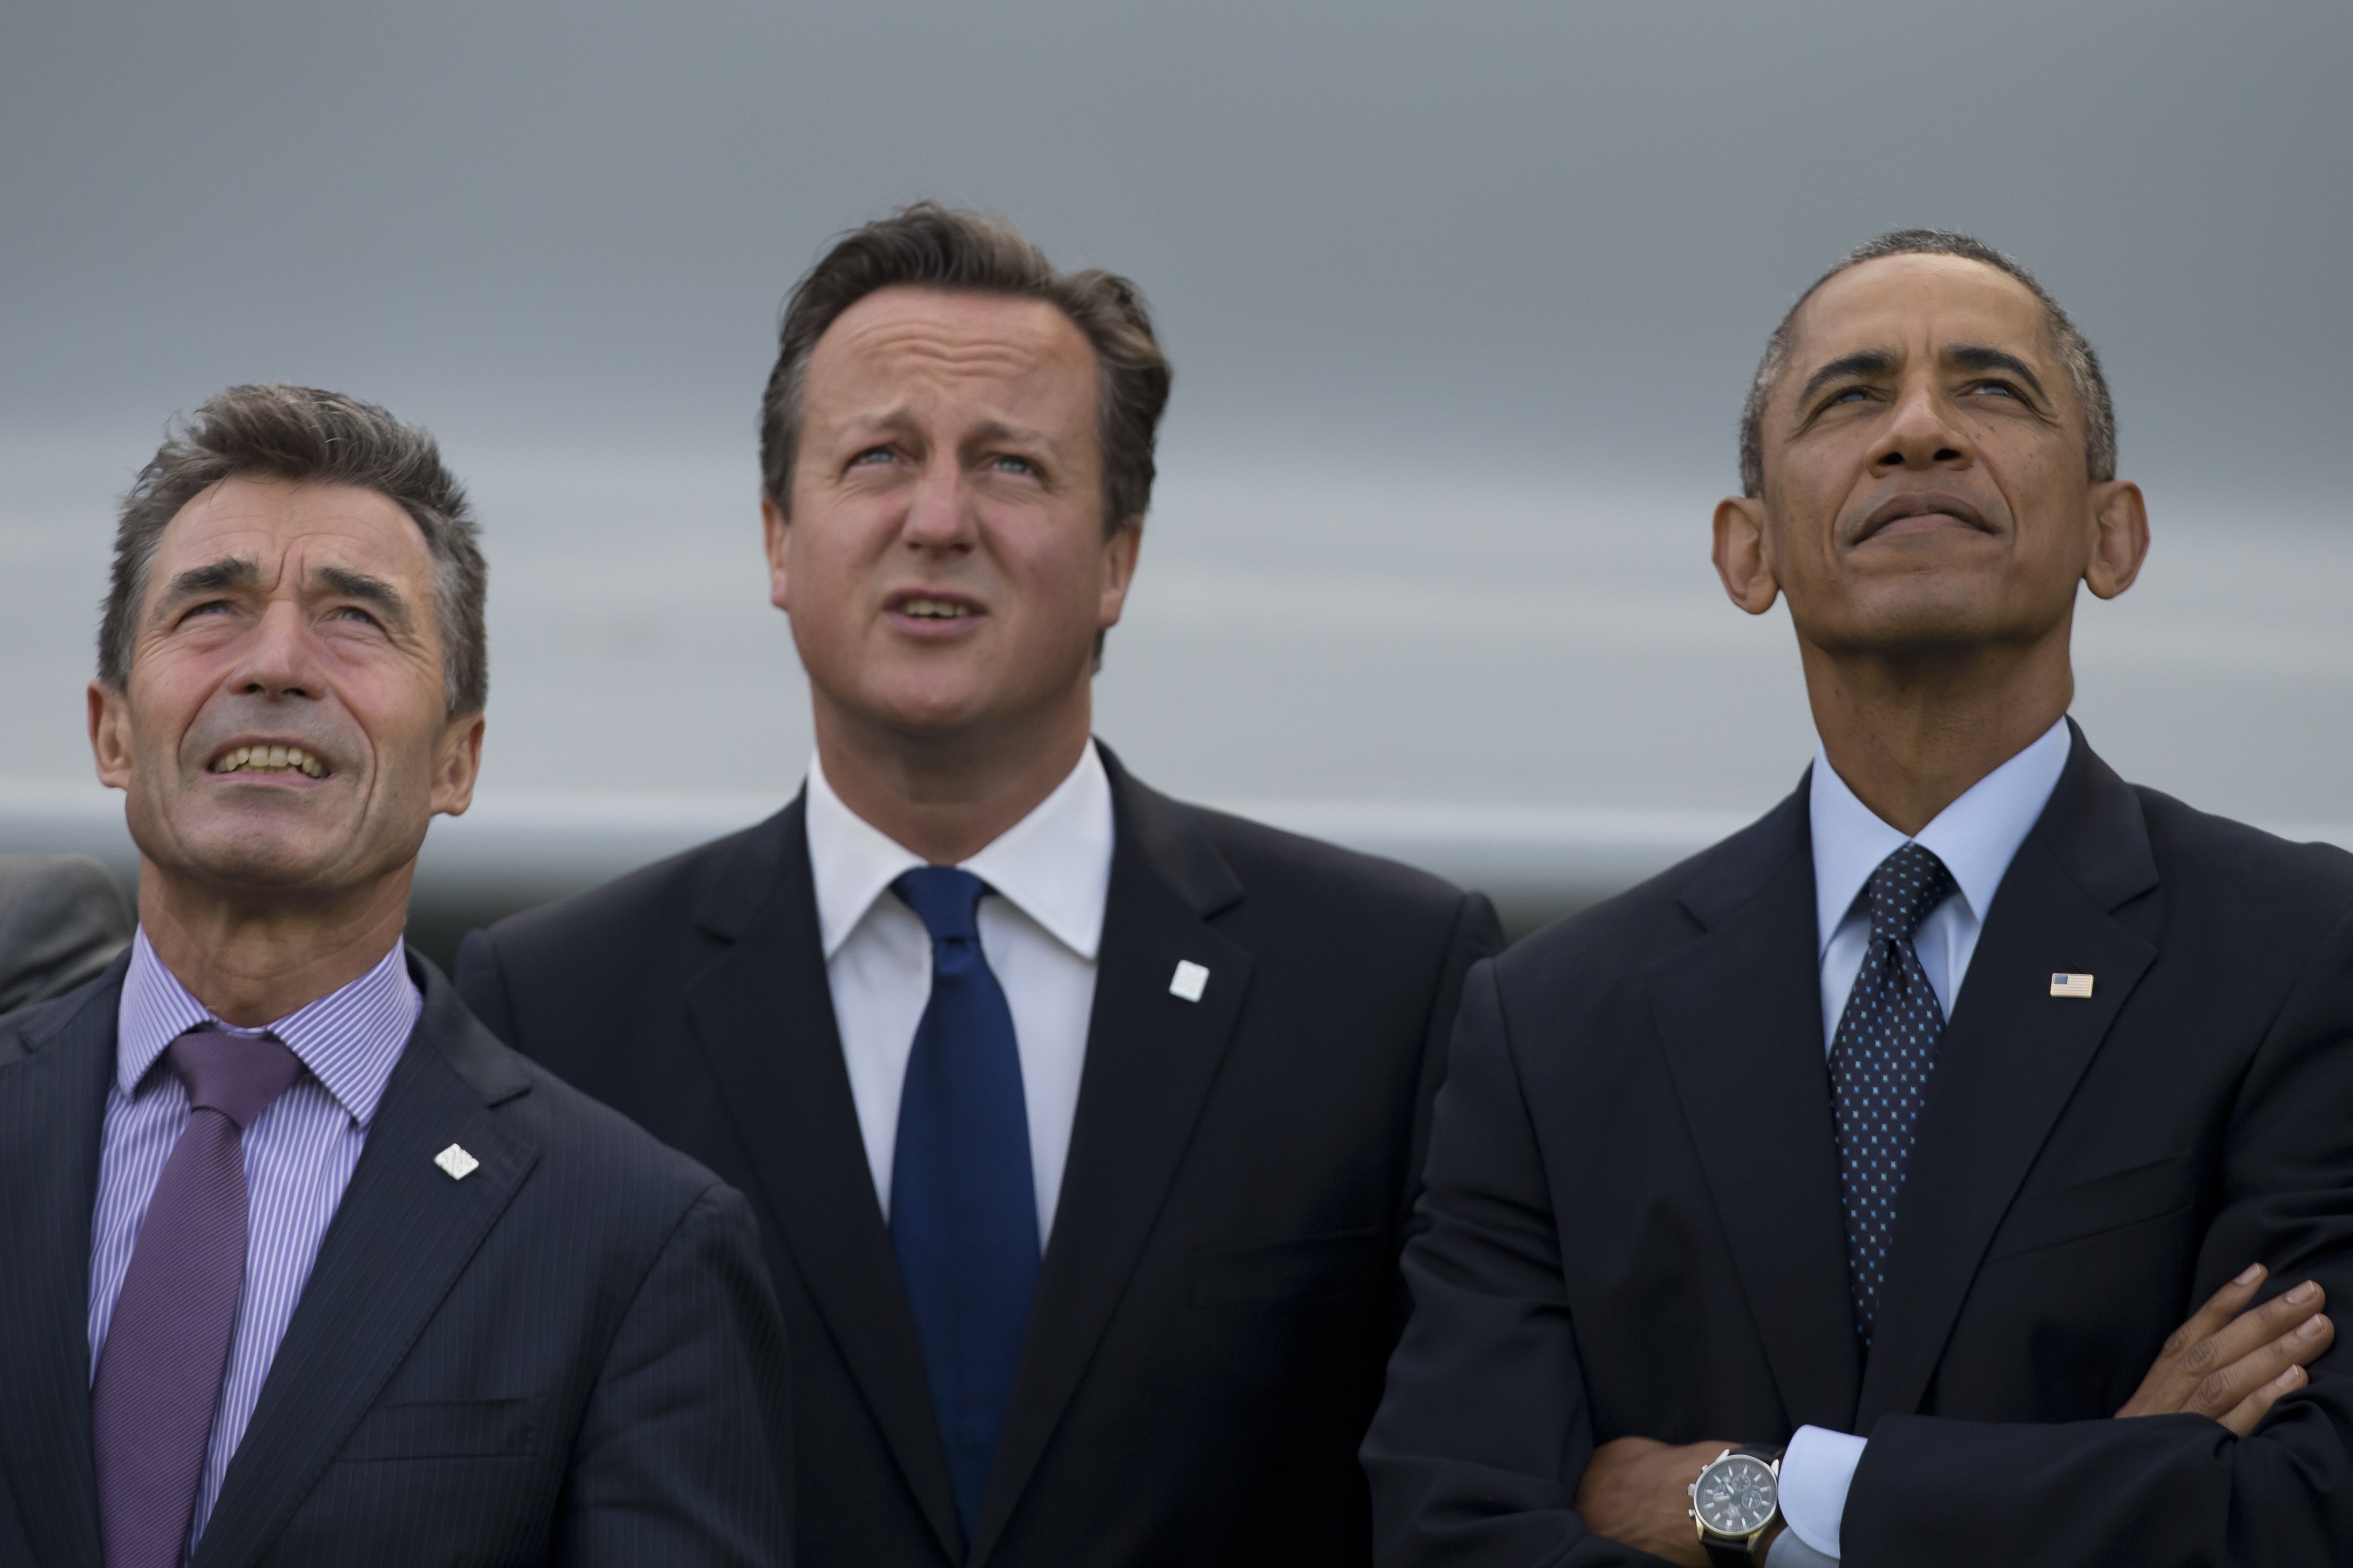 Britain NATO Summit